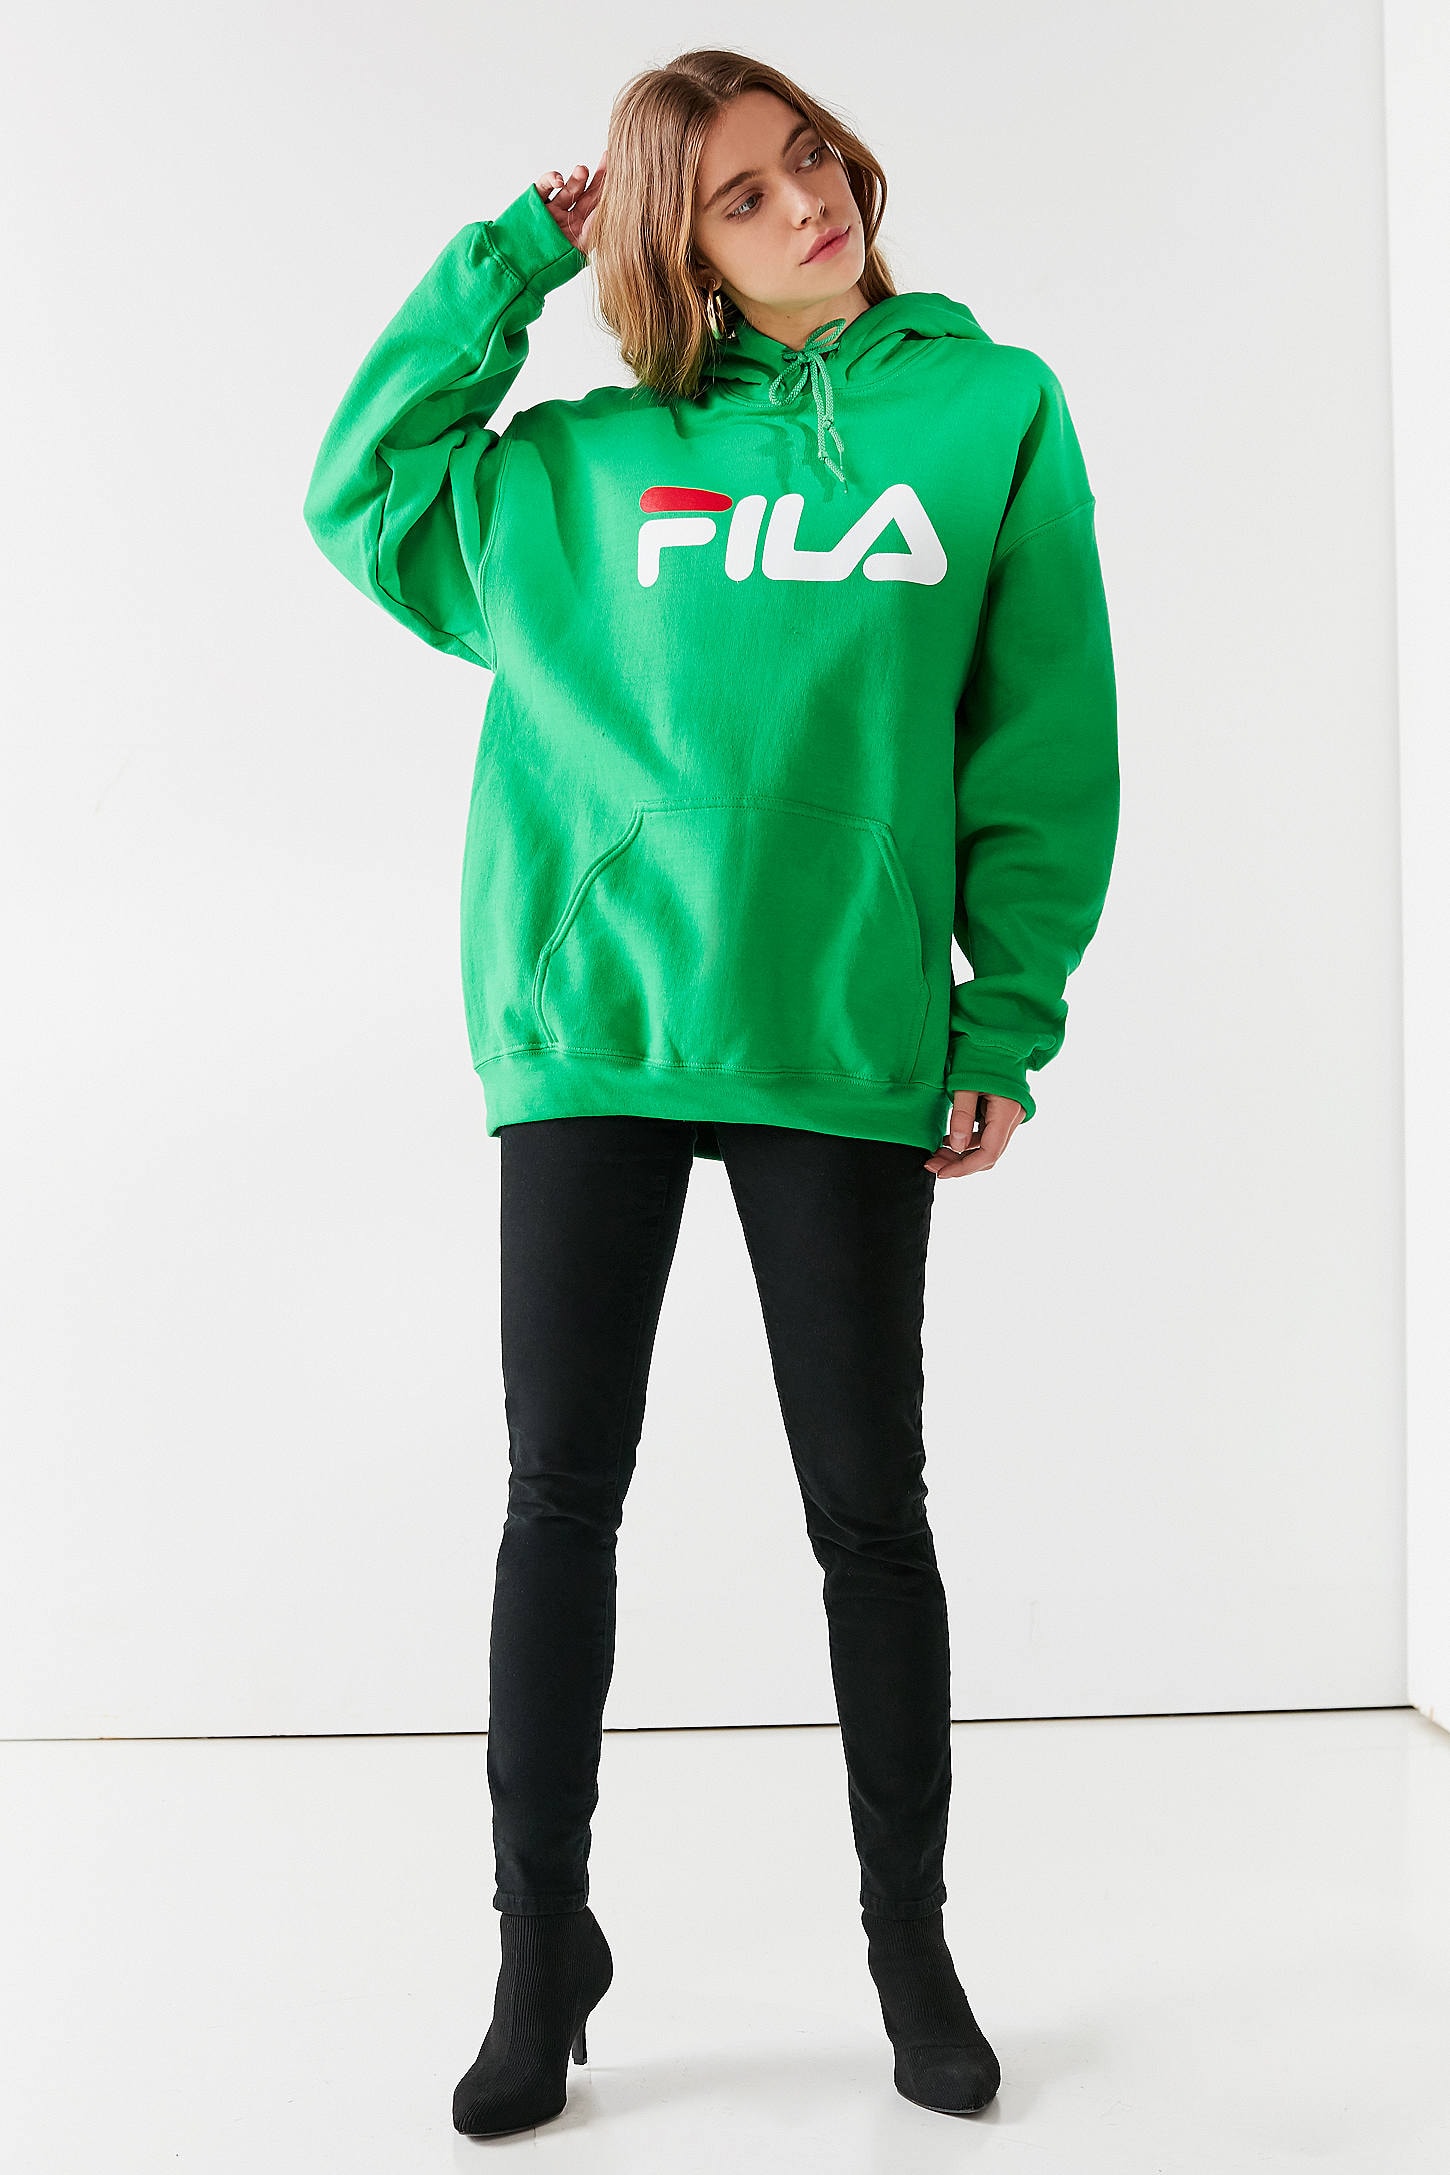 FILA x Urban Outfitters Logo Hoodie in Green